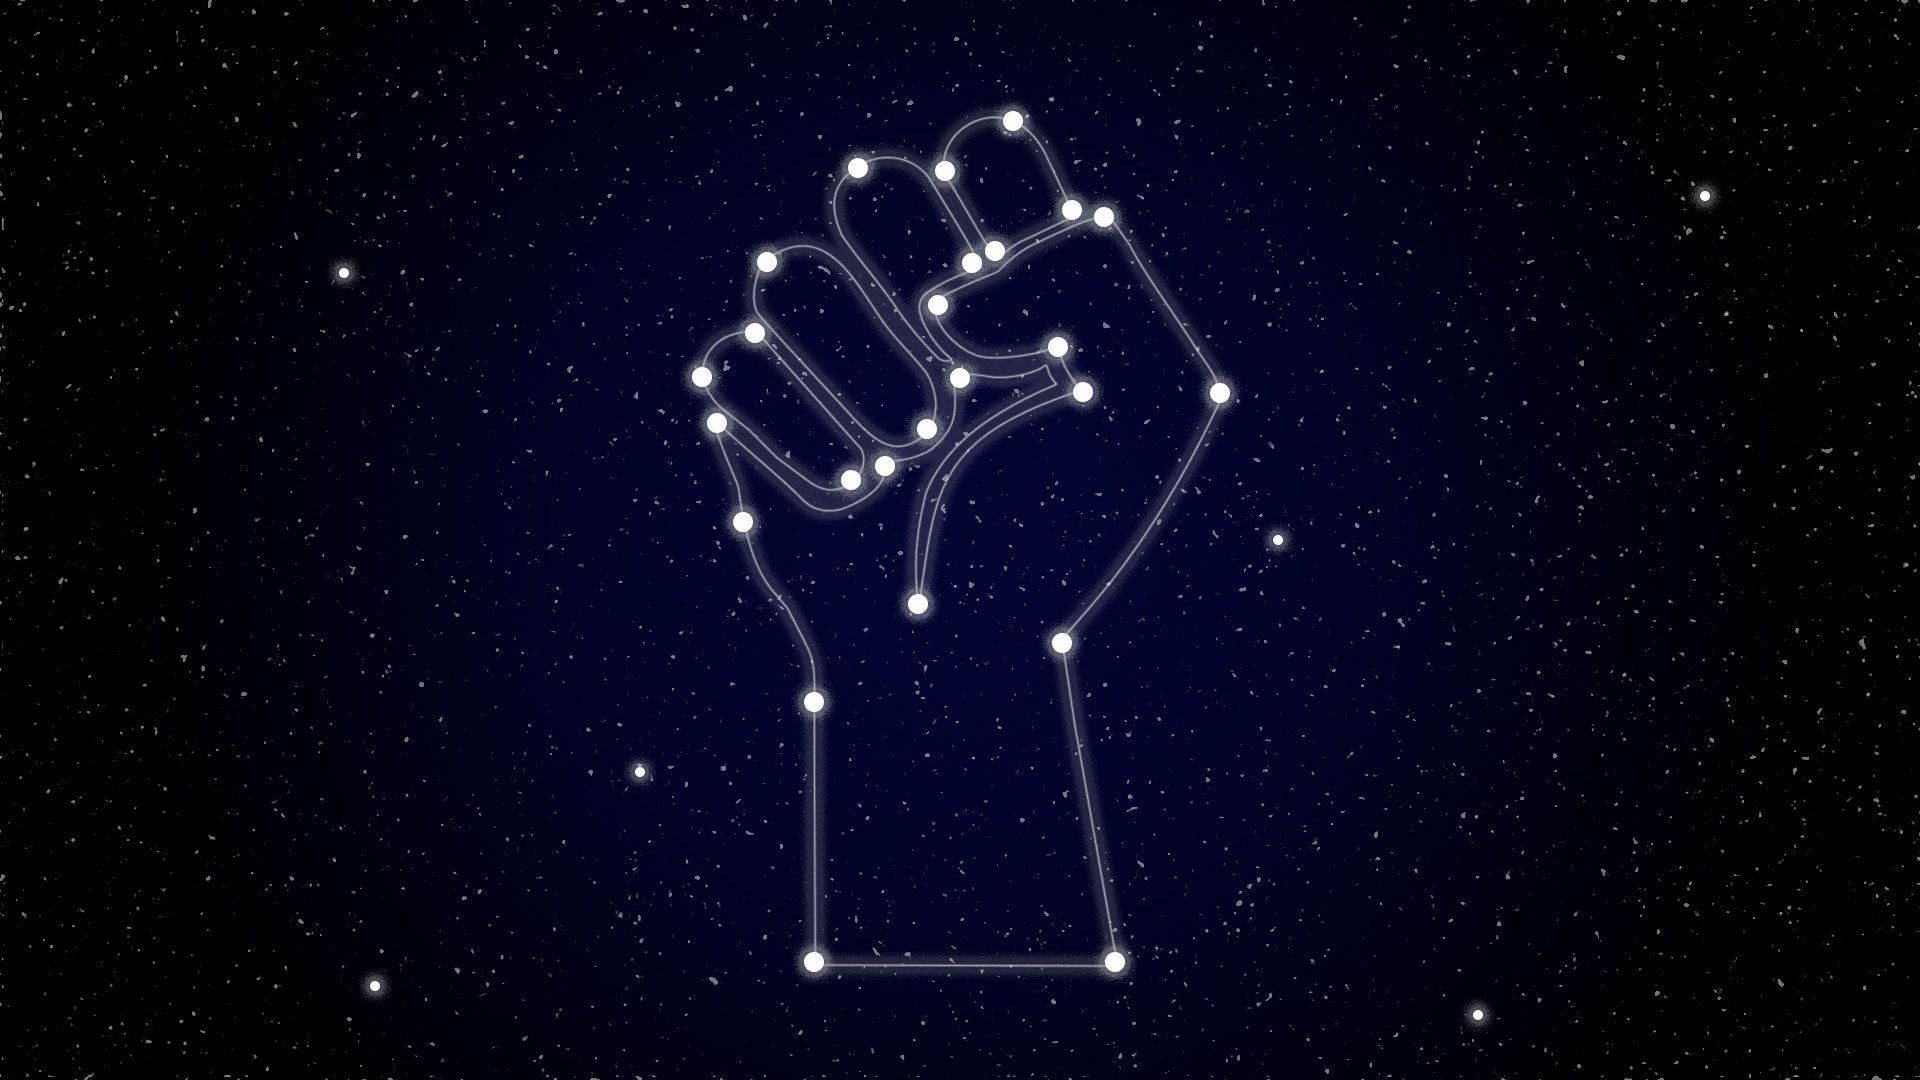 Illustration of glowing fist constellation